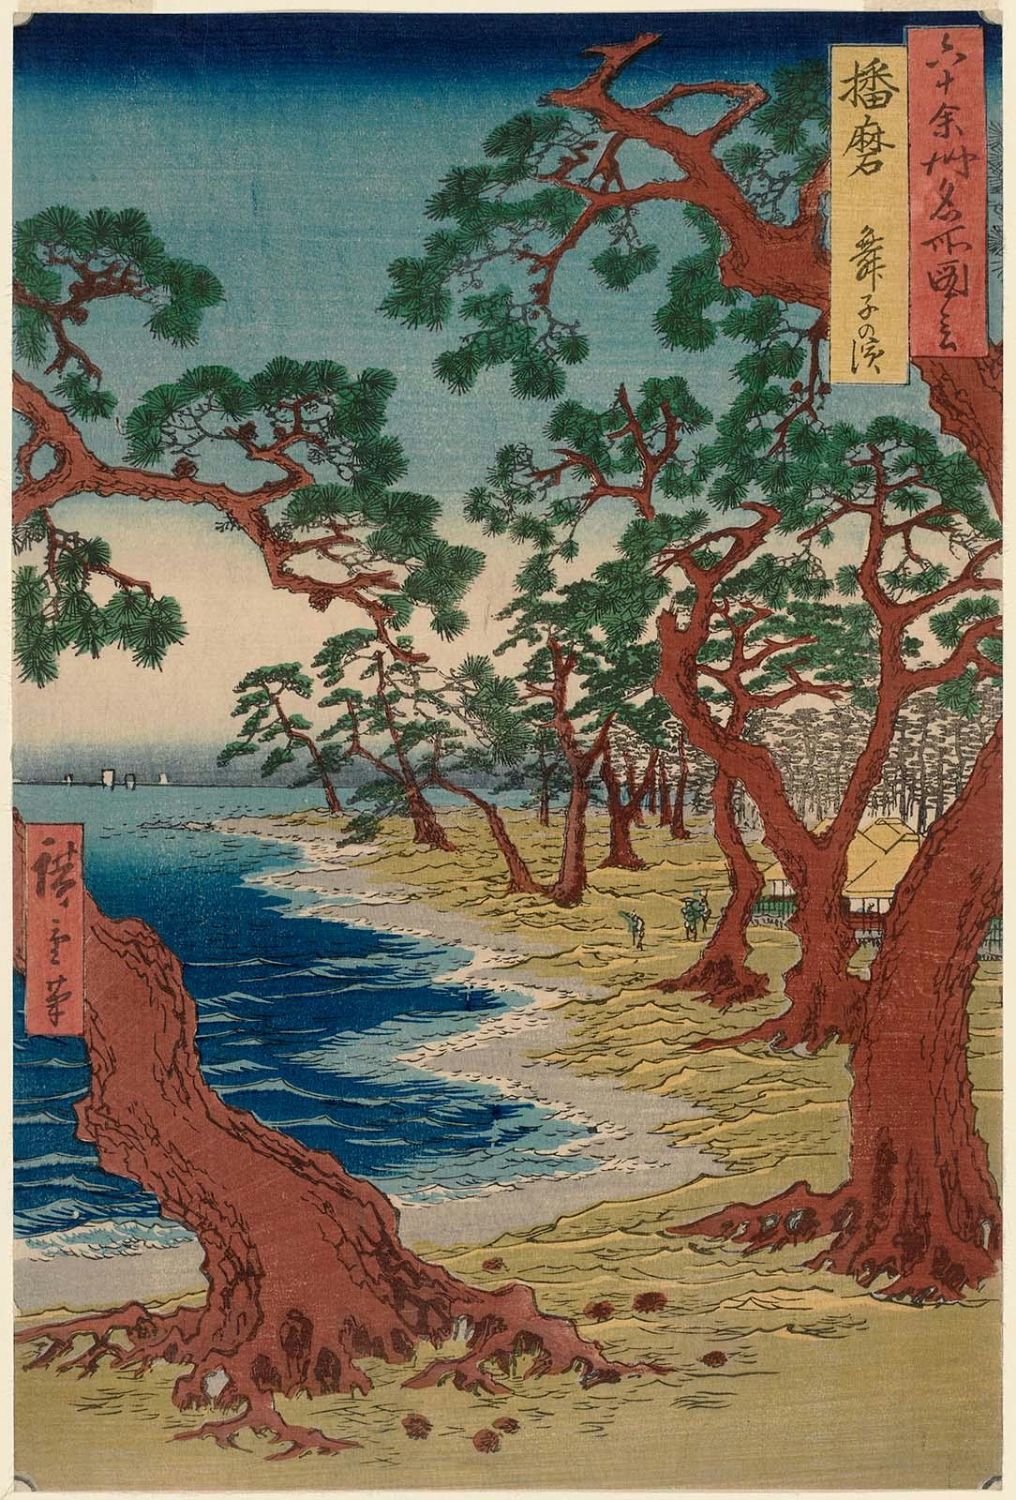 ARTCANVAS Maiko Beach Harima Province 1853 by Utagawa Hiroshige Canvas Art Print